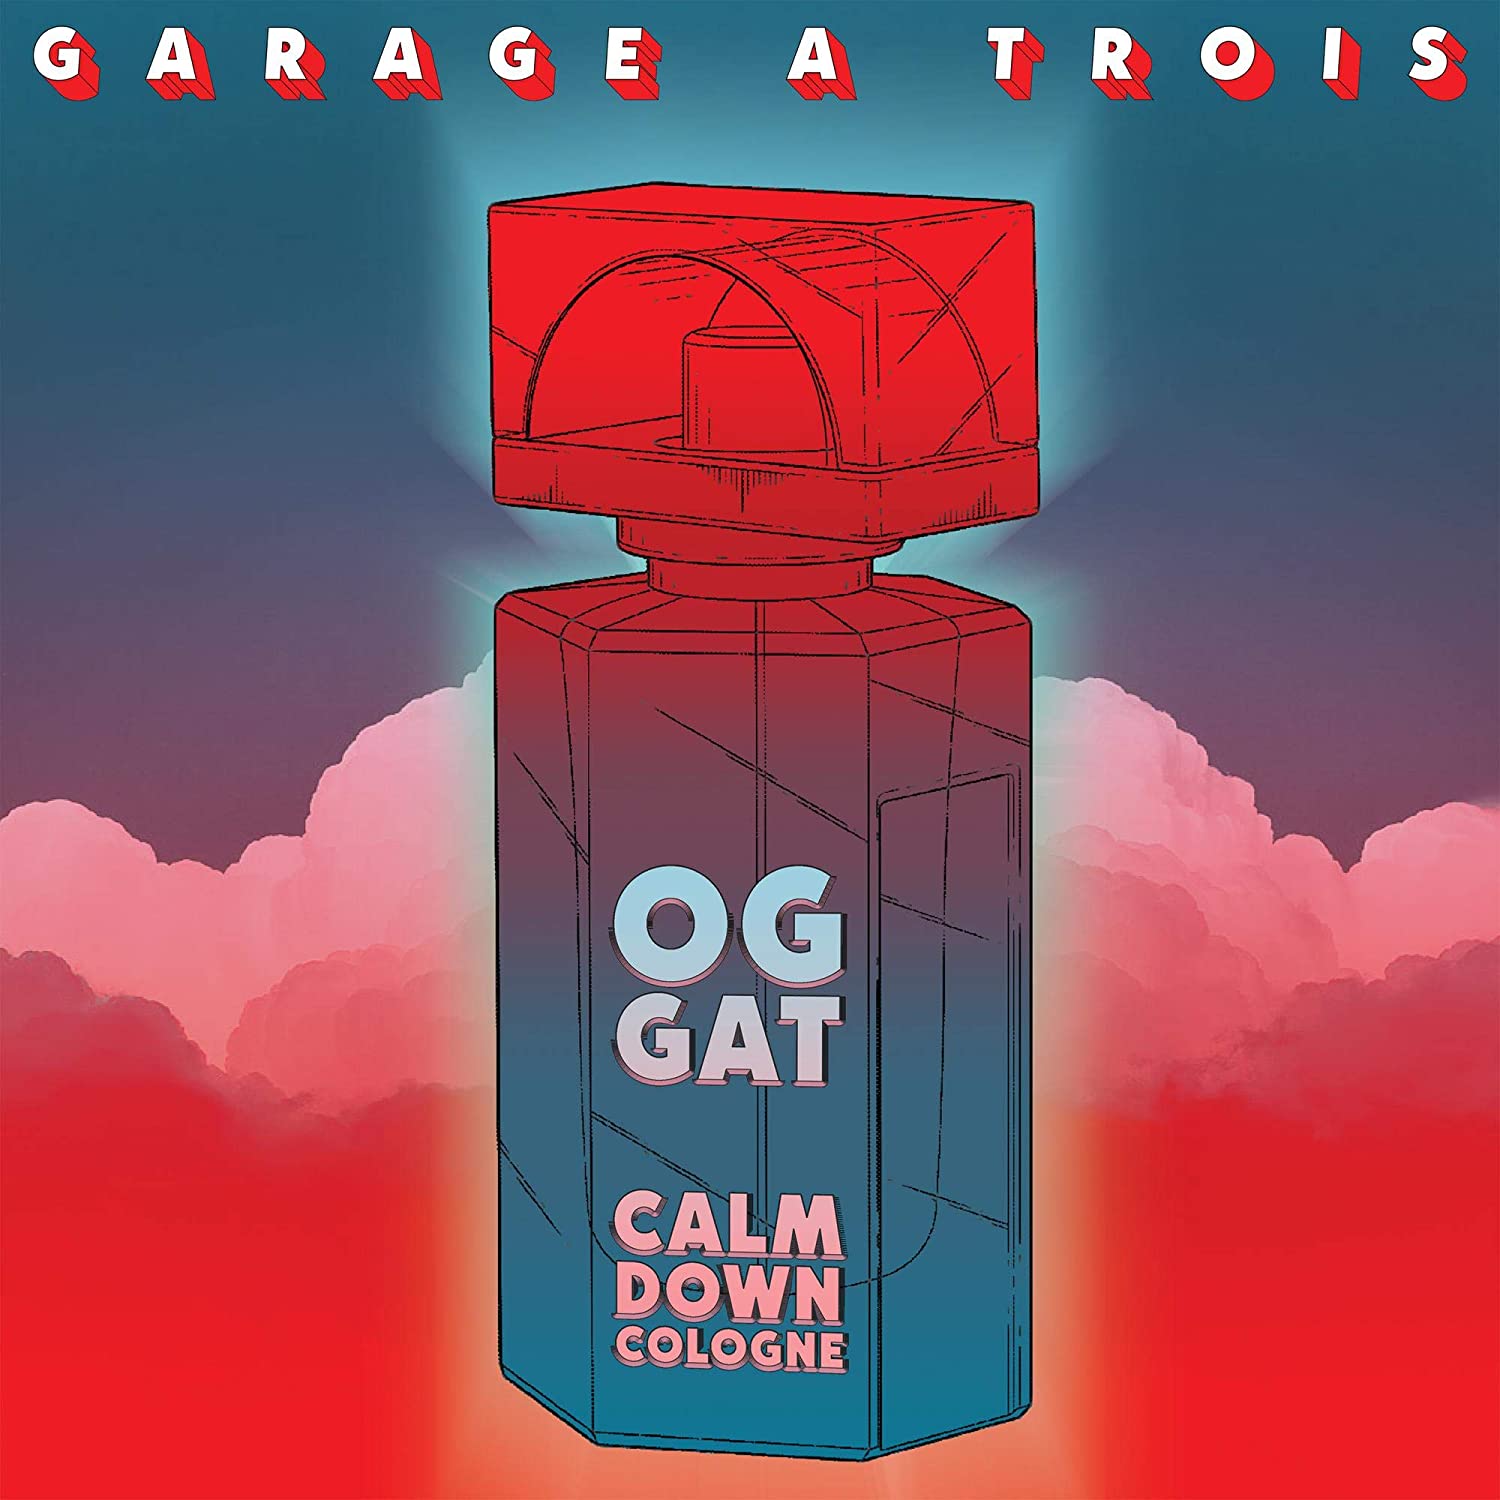 GARAGE A TROIS - Calm Down Cologne cover 